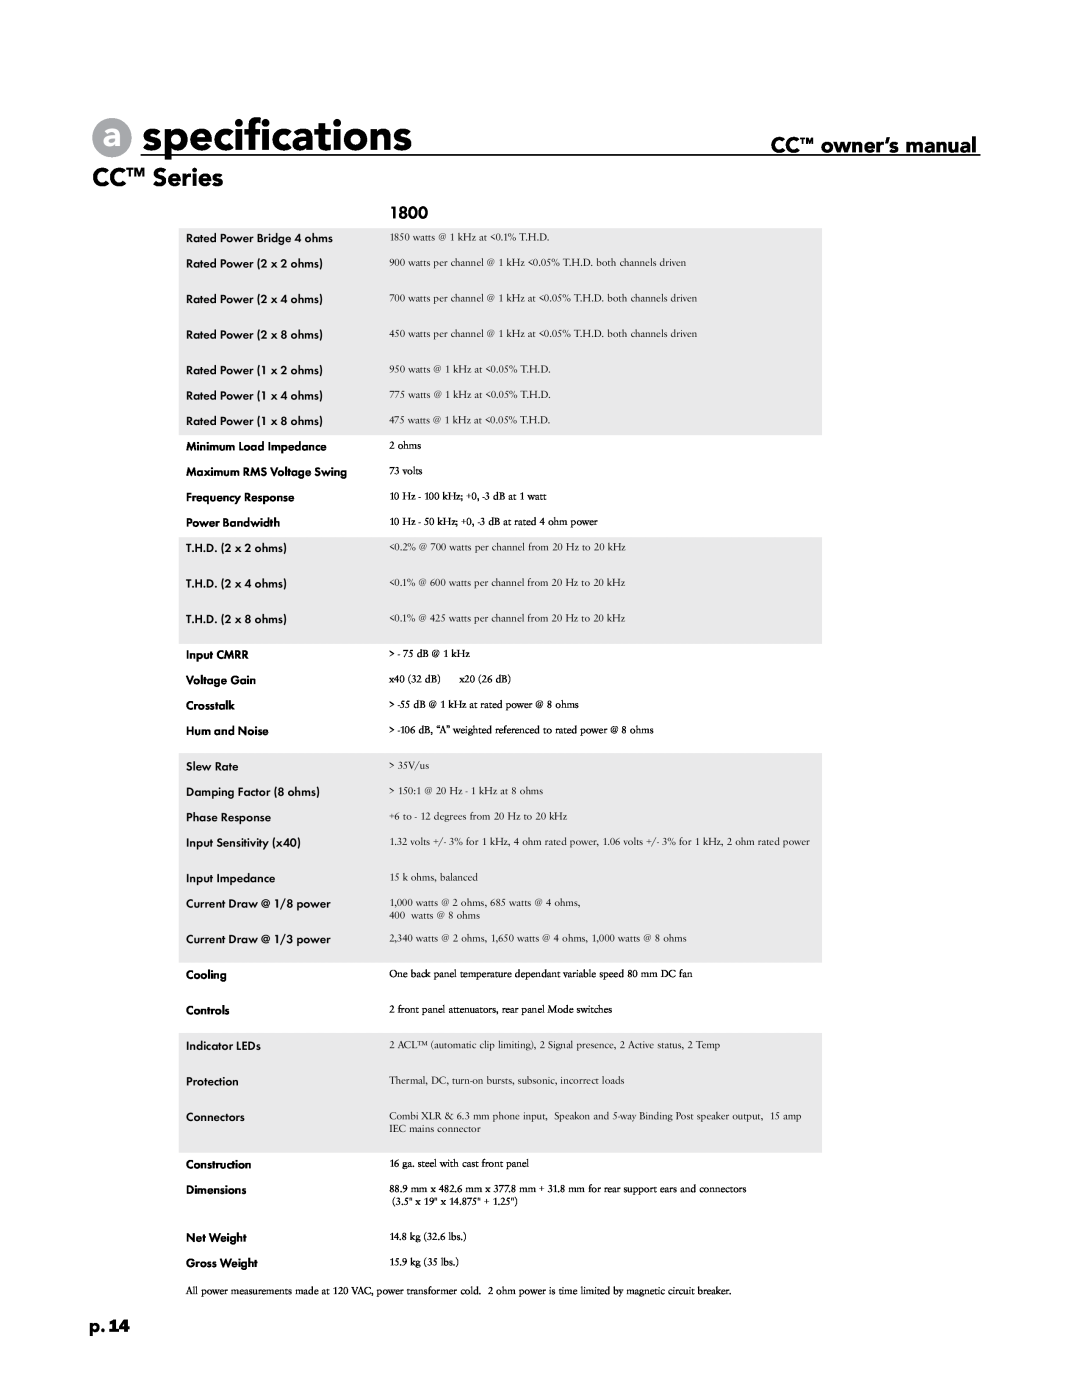 Crest Audio CC 4000, CC 5500, CC 2800, CC 1800 owner manual specifications, CCTM Series, CC owner’s manual, p.14 